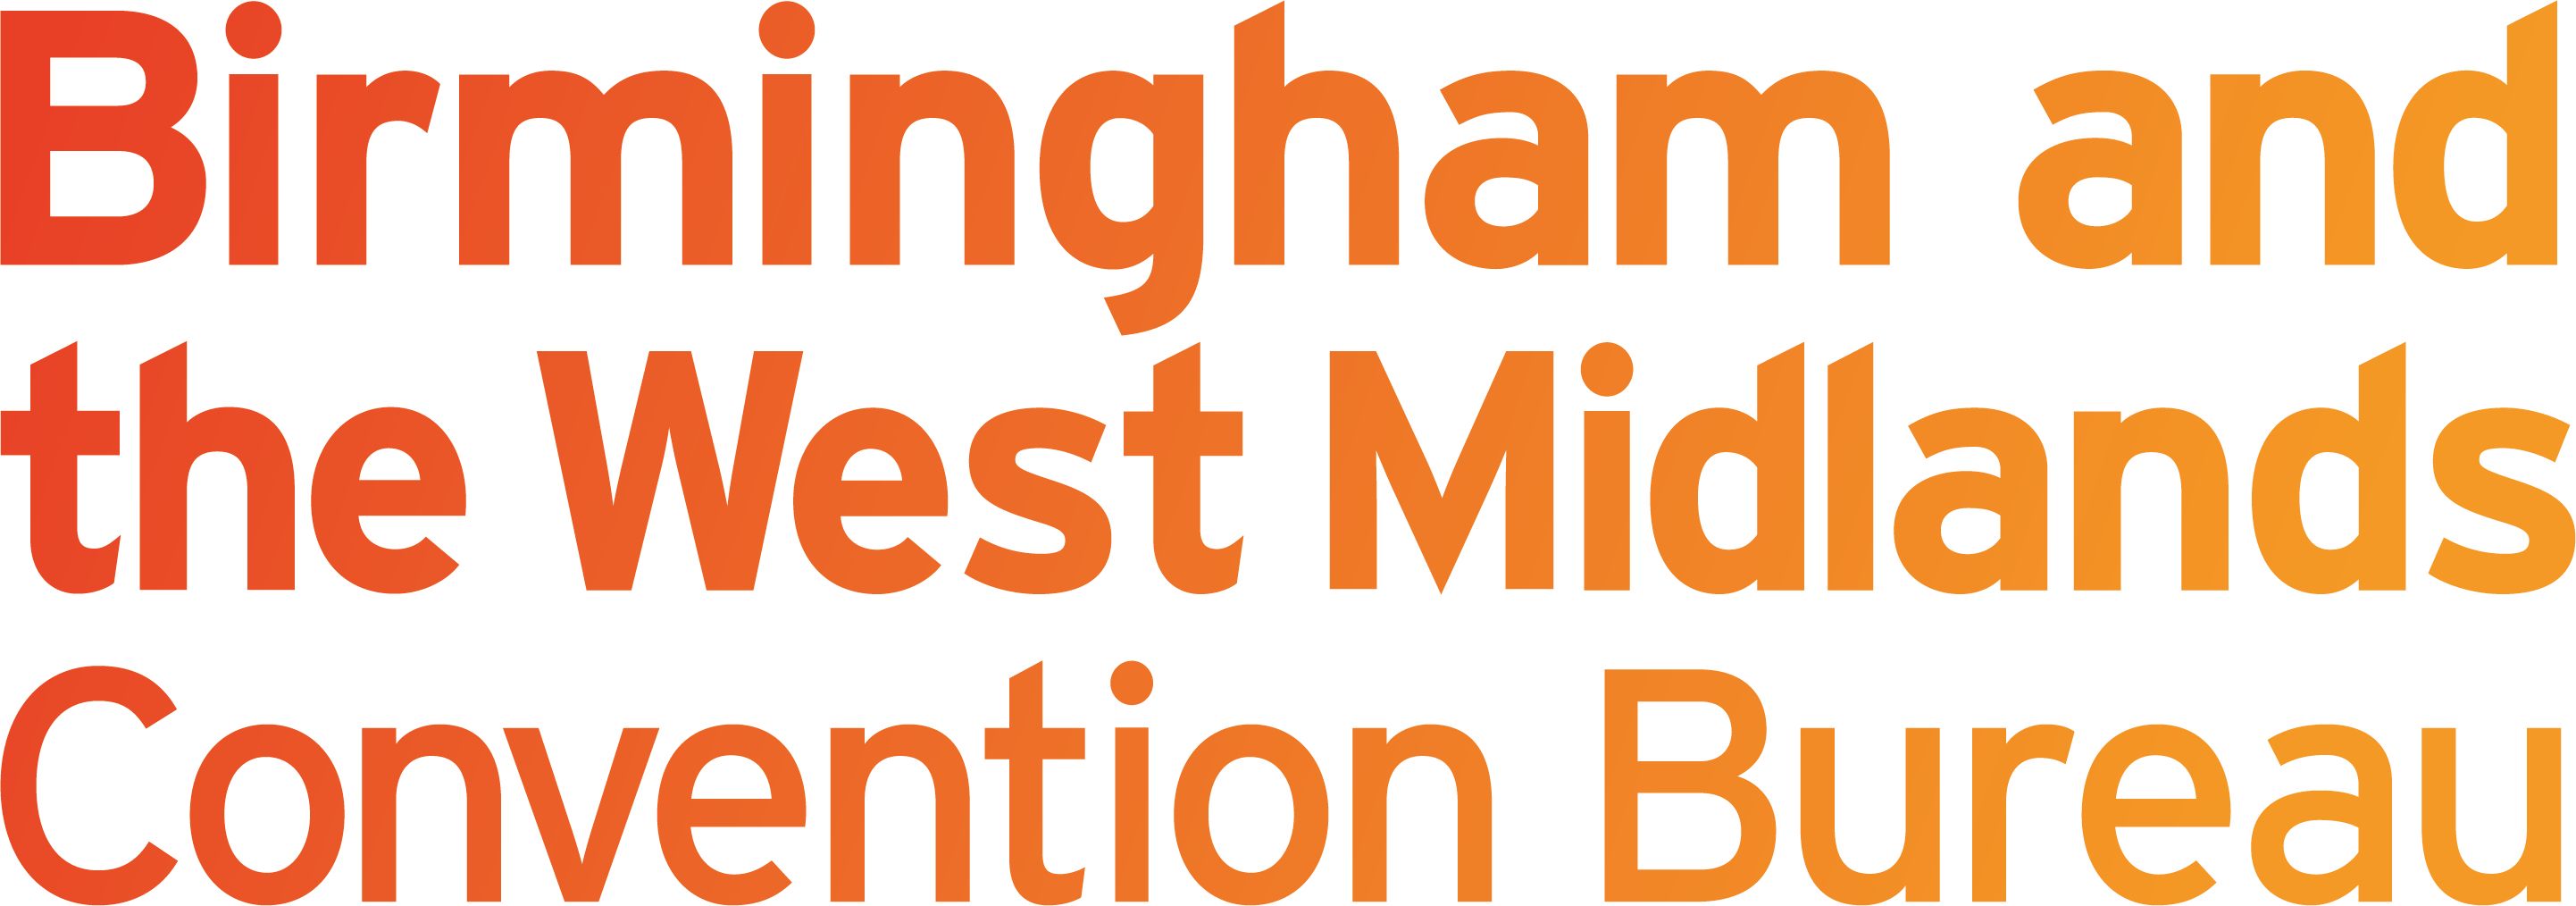 Birmingham and West Midlands Convention Bureau 